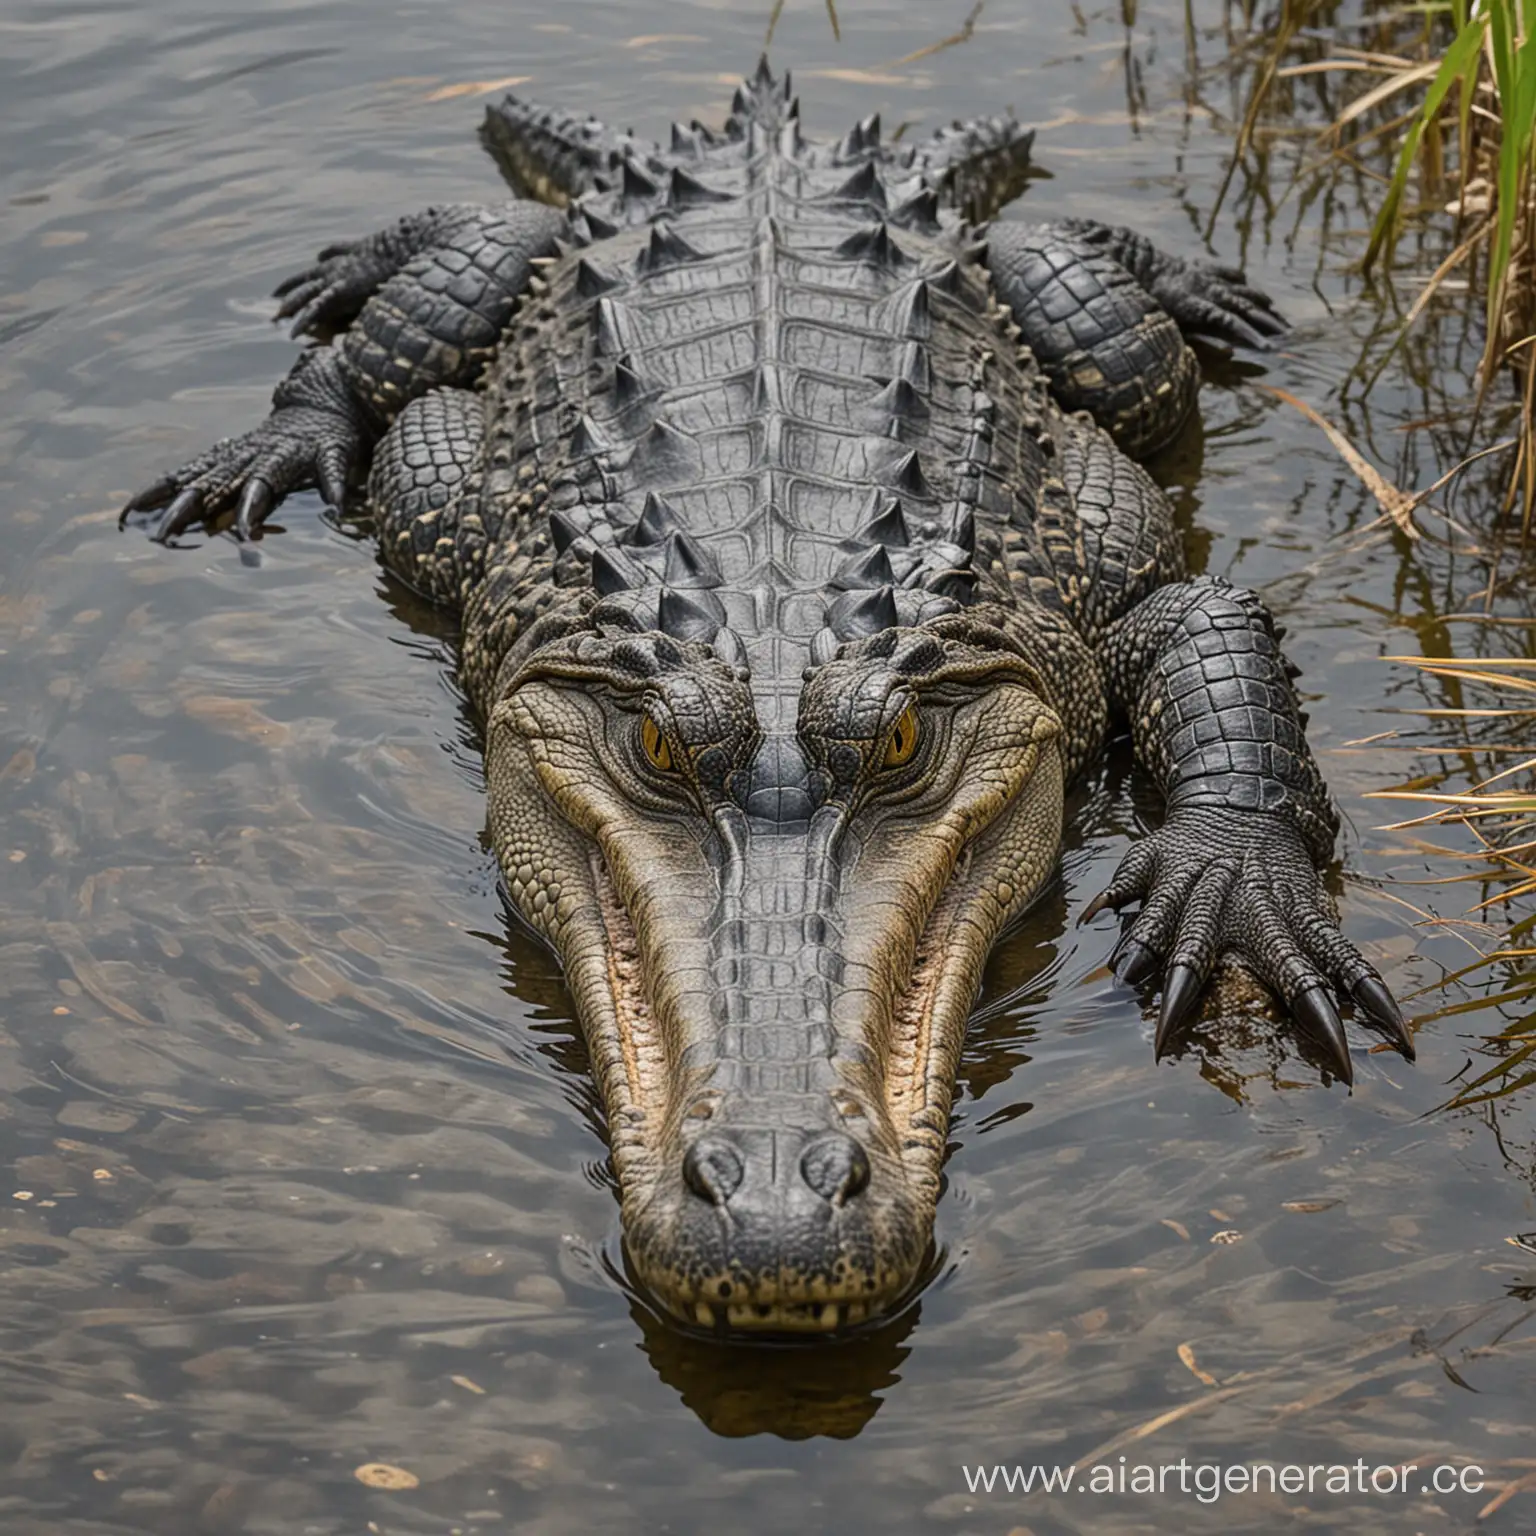 Alligator-Basking-in-the-Florida-Sunshine